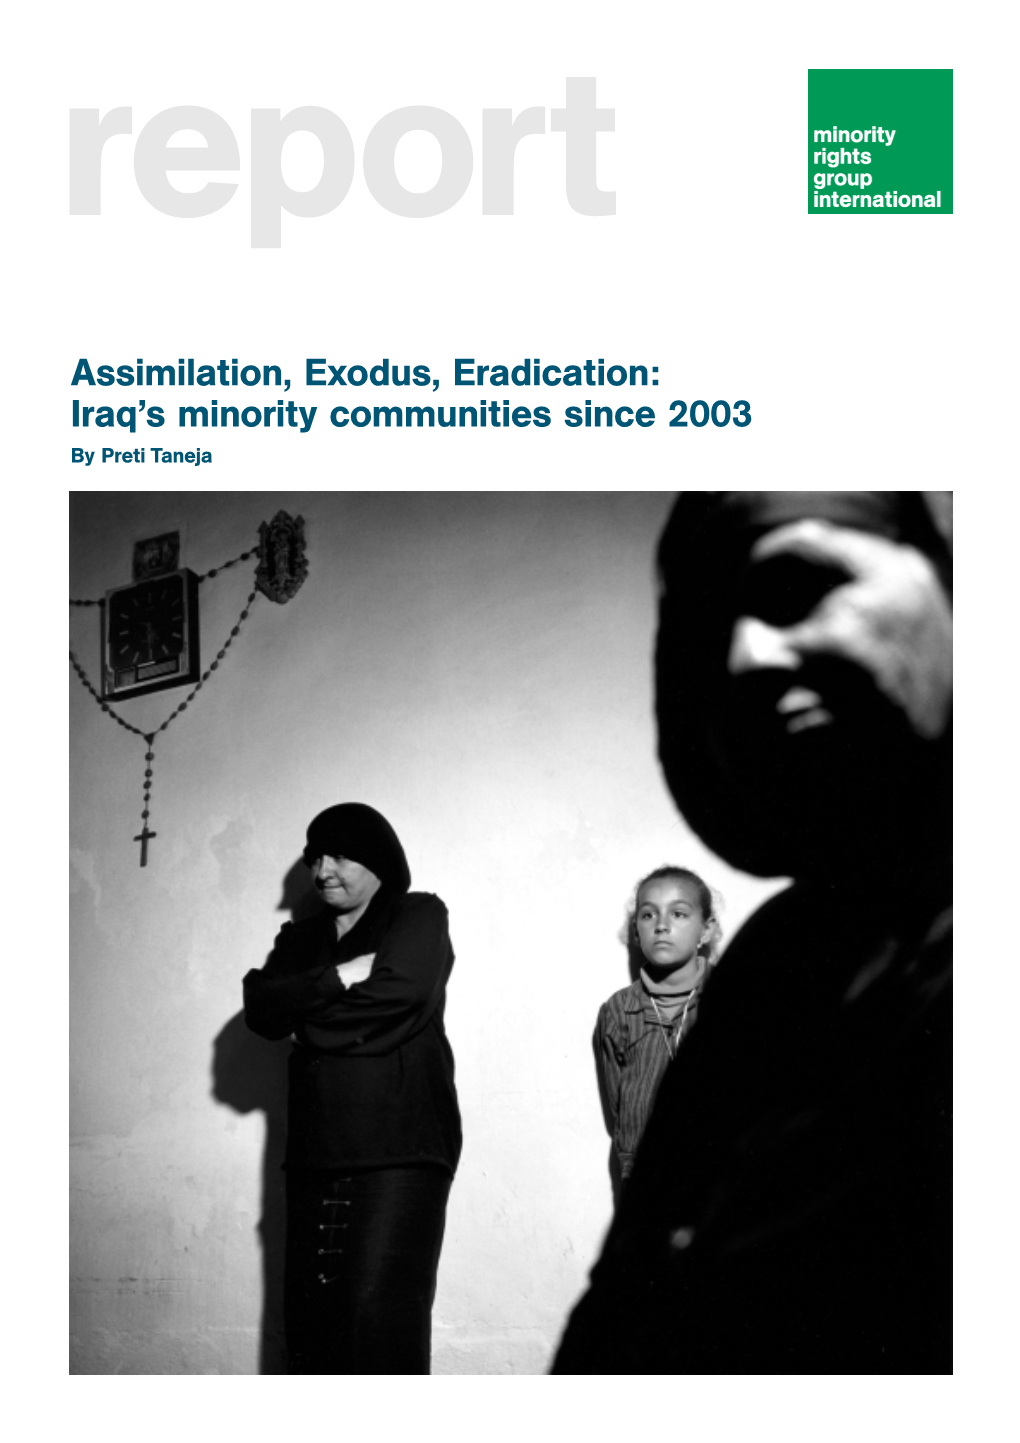 Assimilation, Exodus, Eradication: Iraq's Minority Communities Since